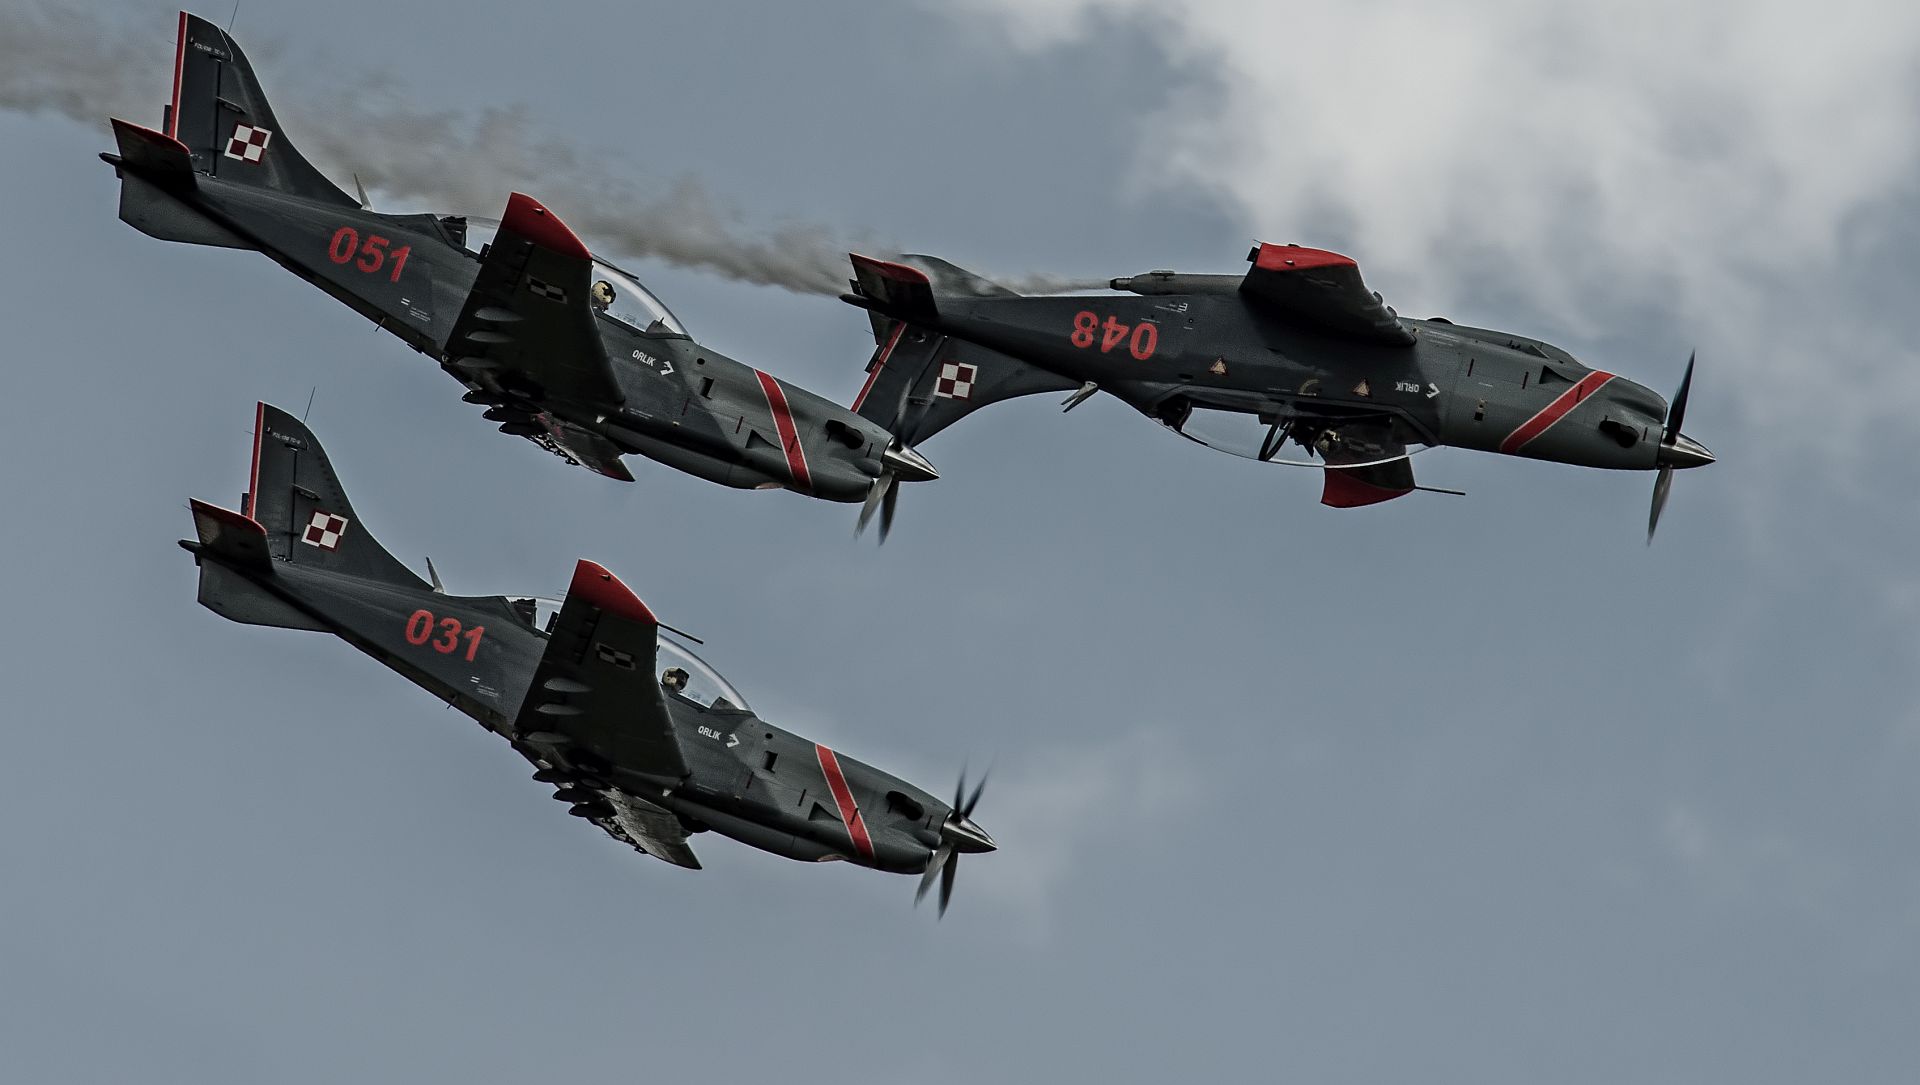 'Orlik' aerobatics team performing 'The Pistol' maneuver